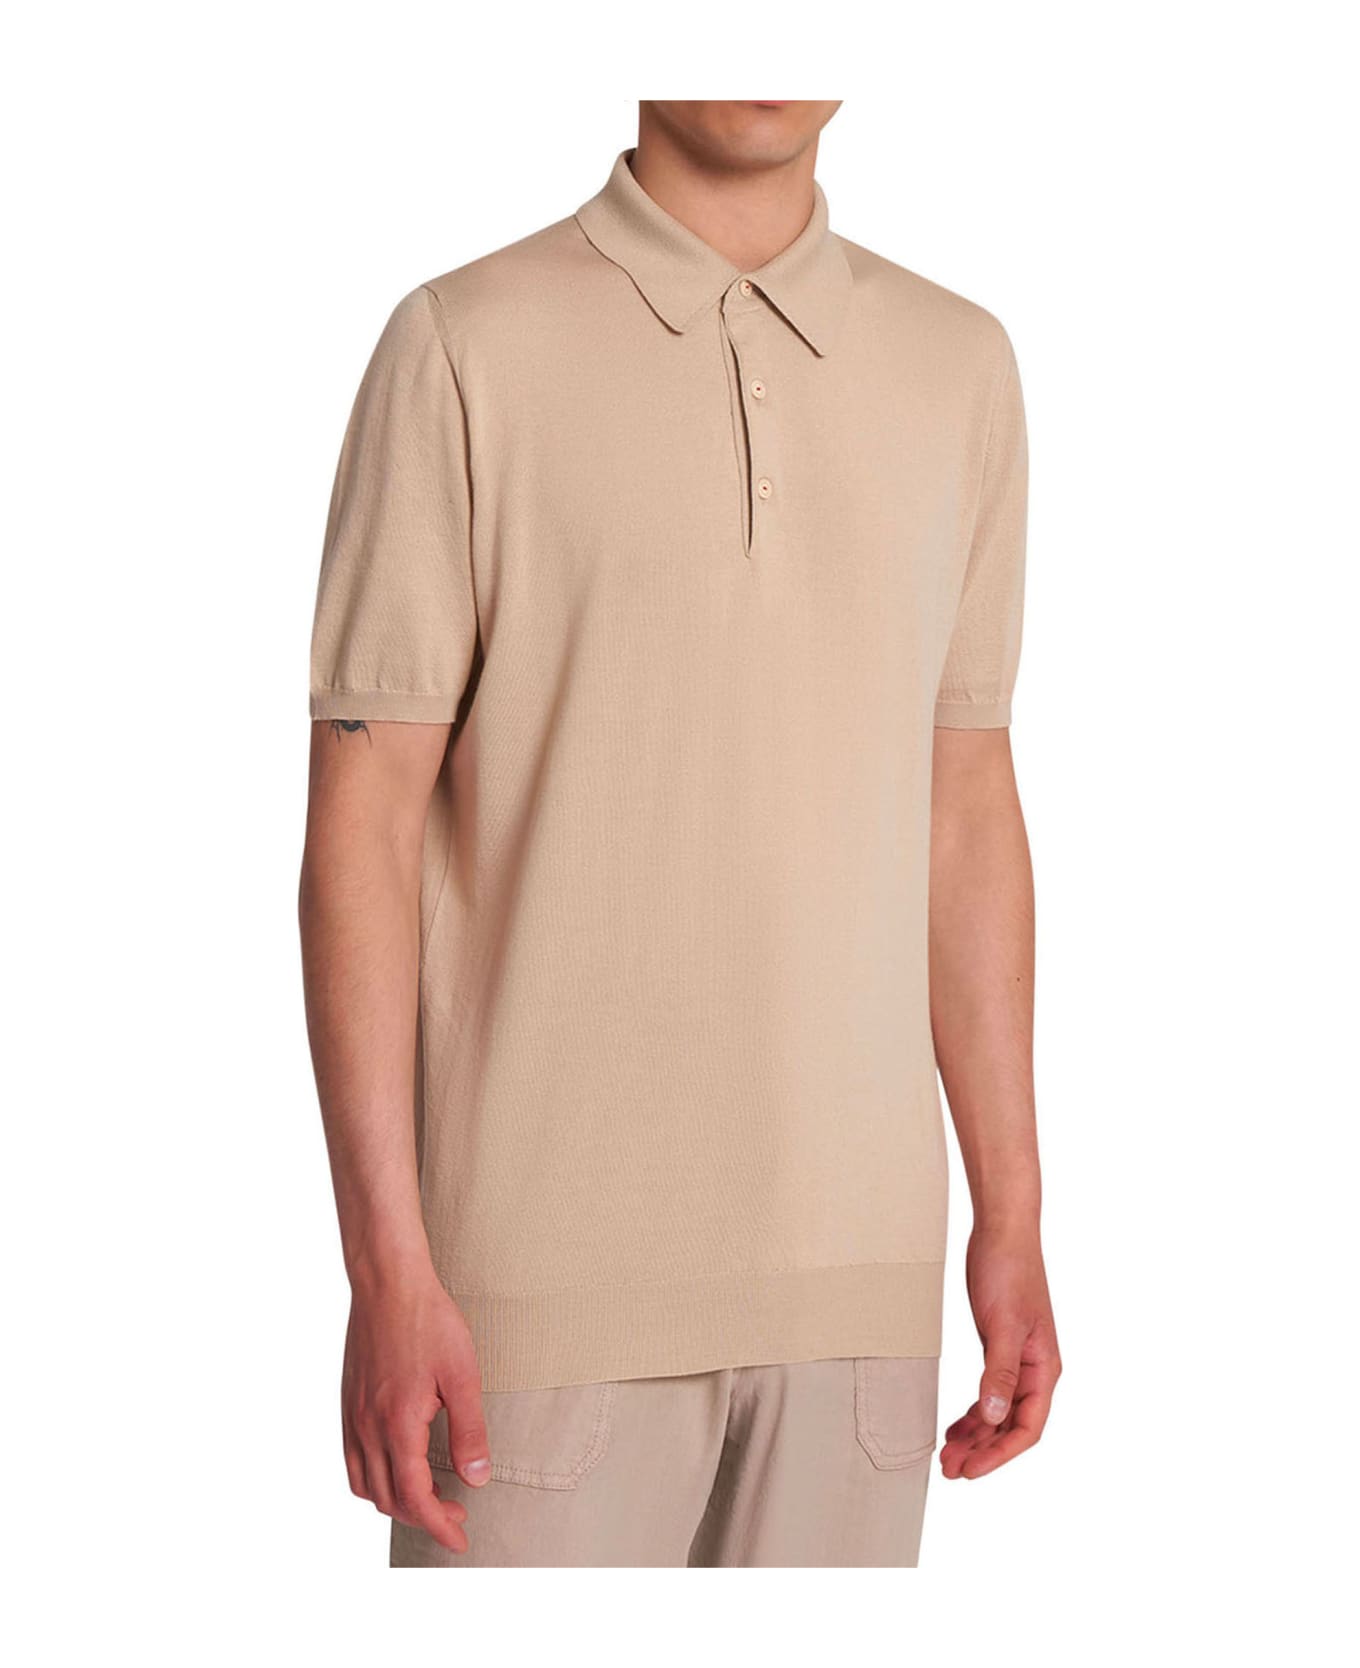 Kiton Jersey Poloshirt Cotton - NATURAL BEIGE